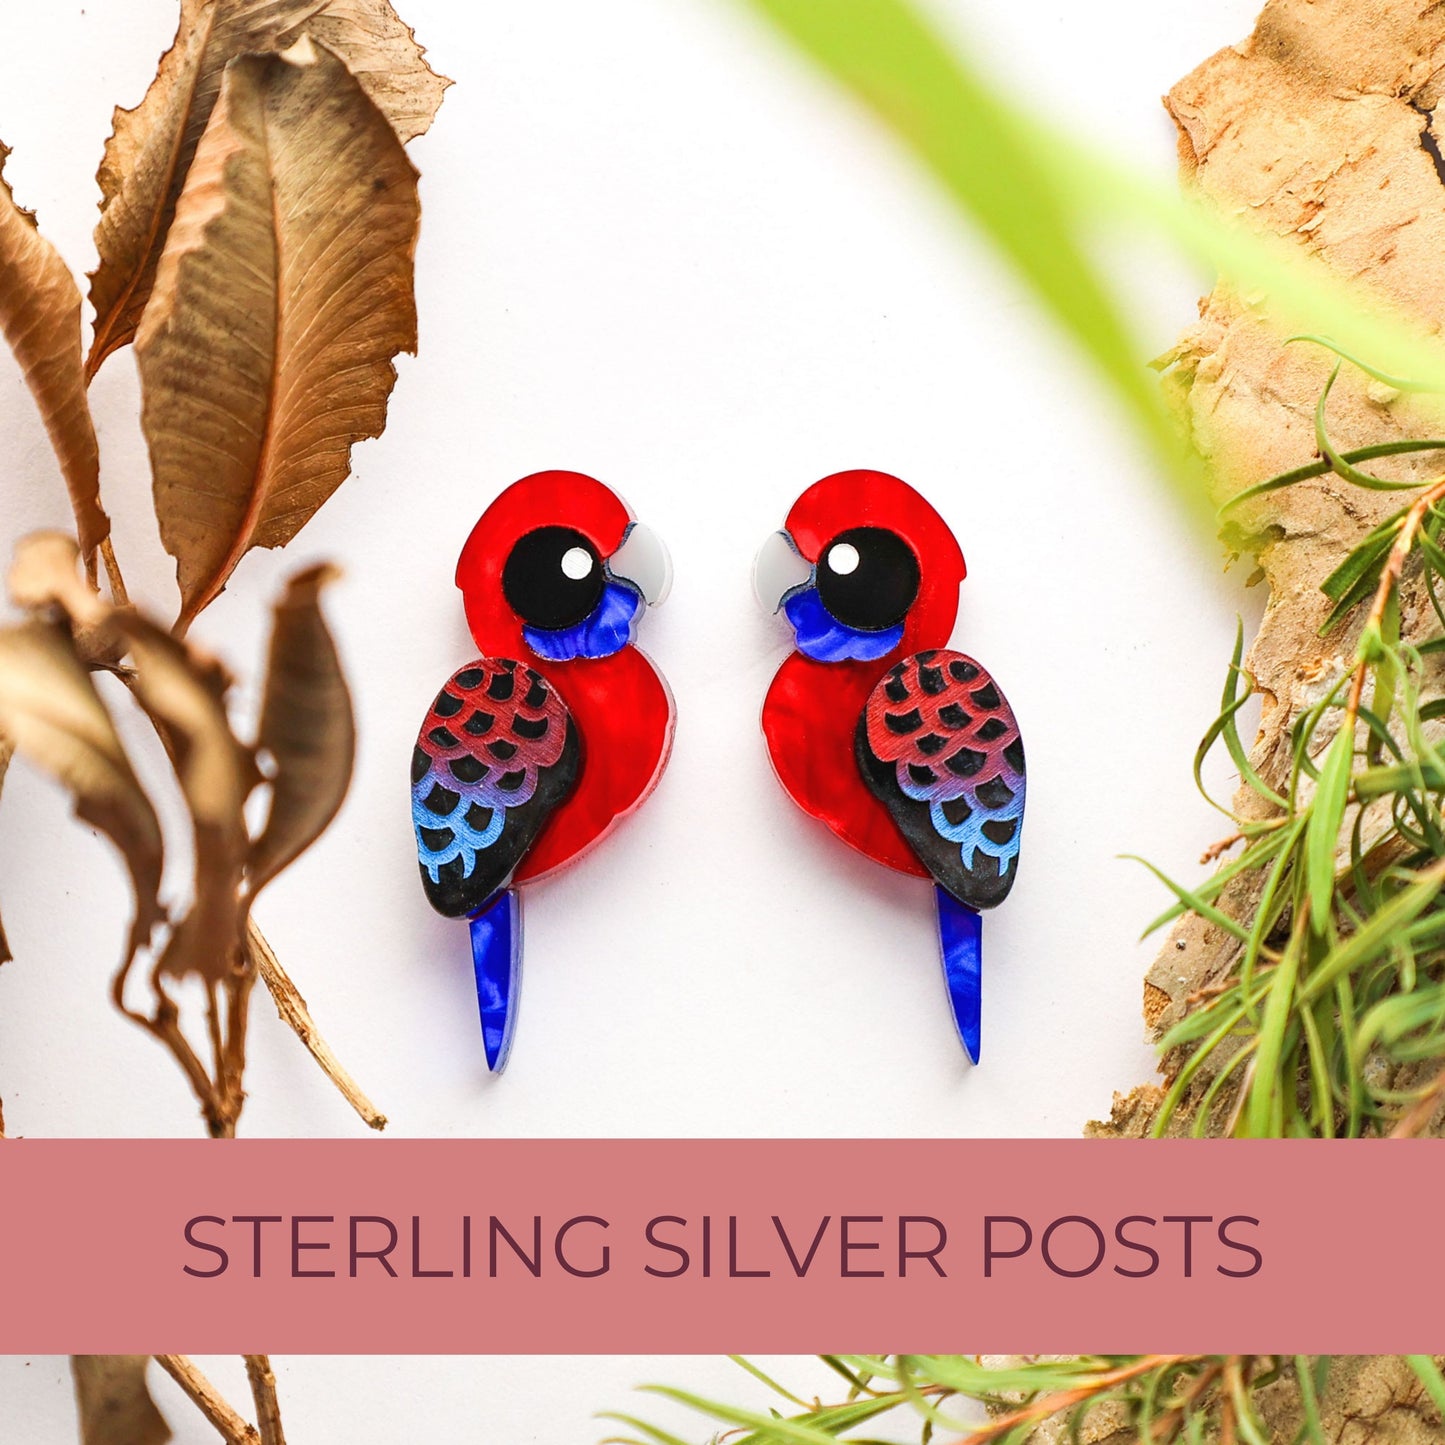 BINKABU Crimson Rosella handmade acrylic bird earrings